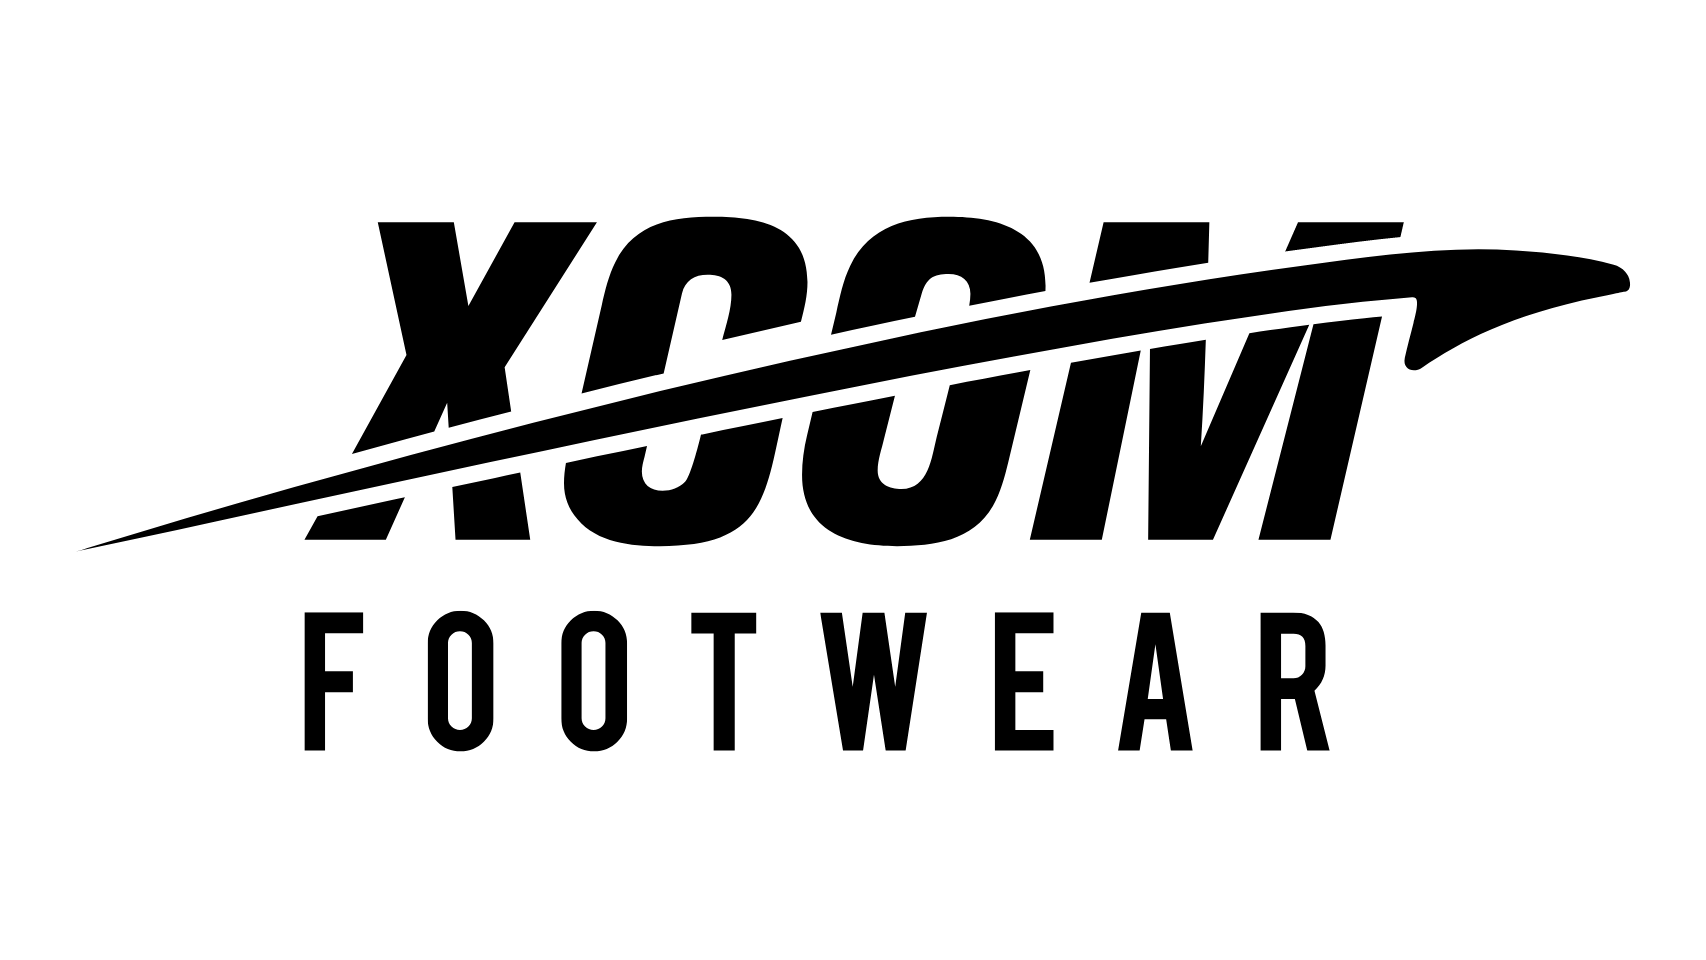 X-Com Footwear Logo